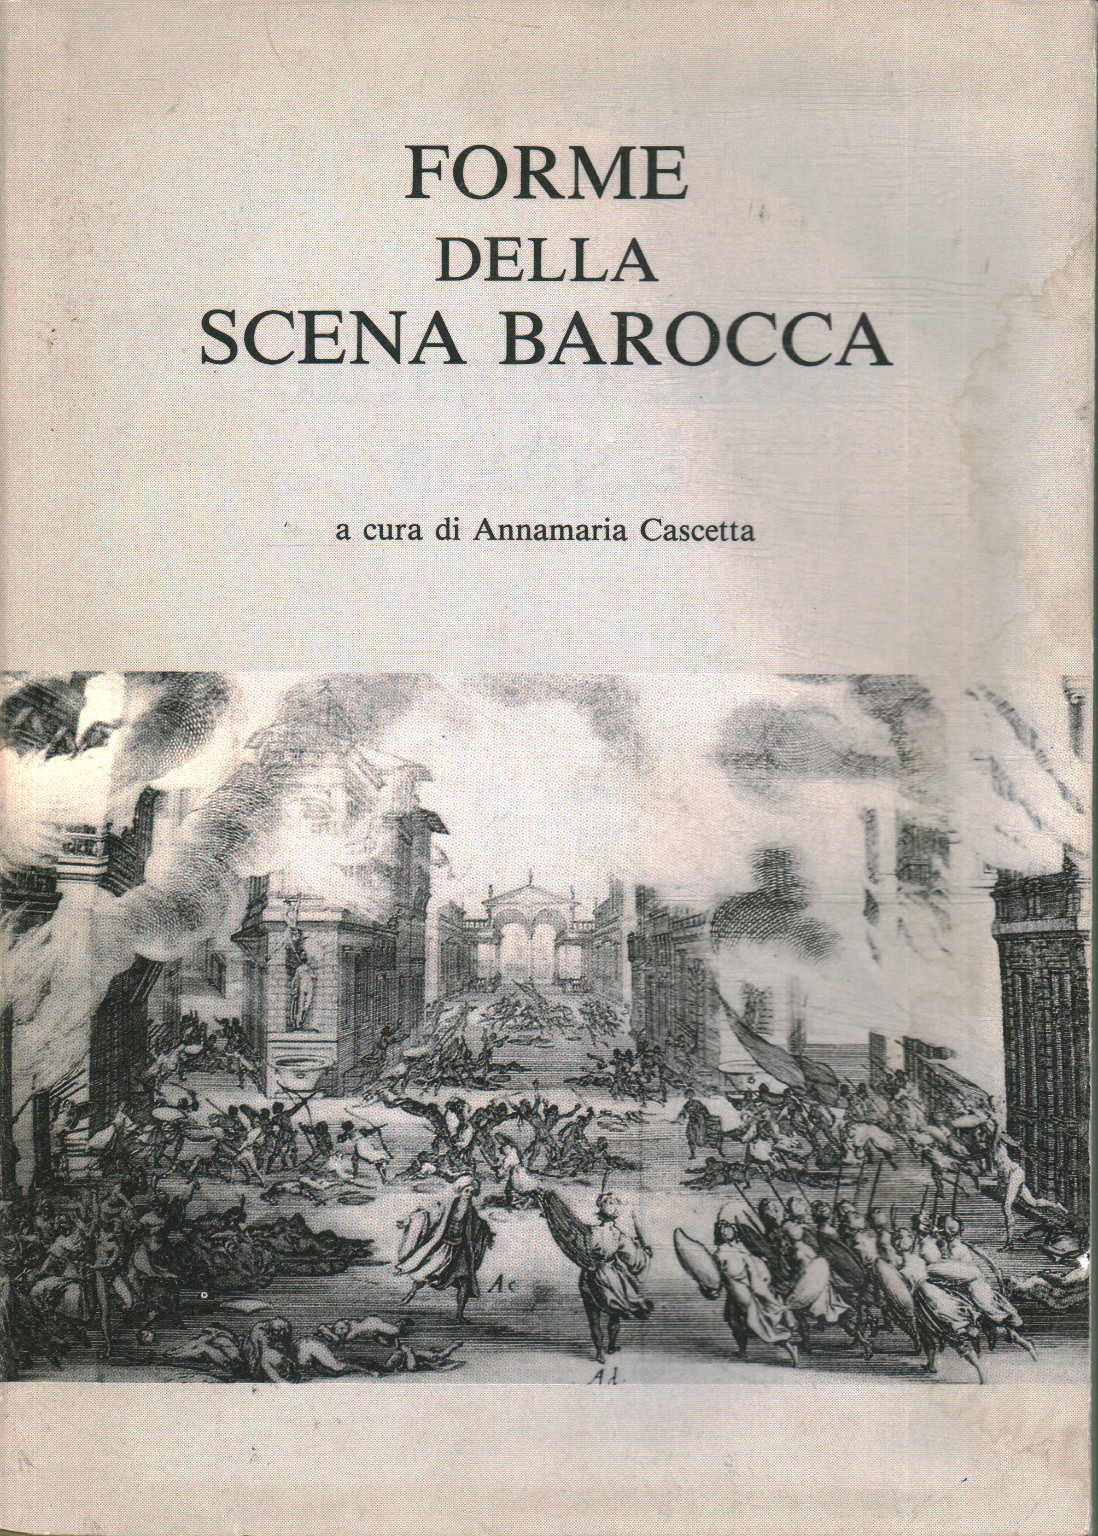 Forms of the Baroque scene. Social communications 2, Annamaria Cascetta